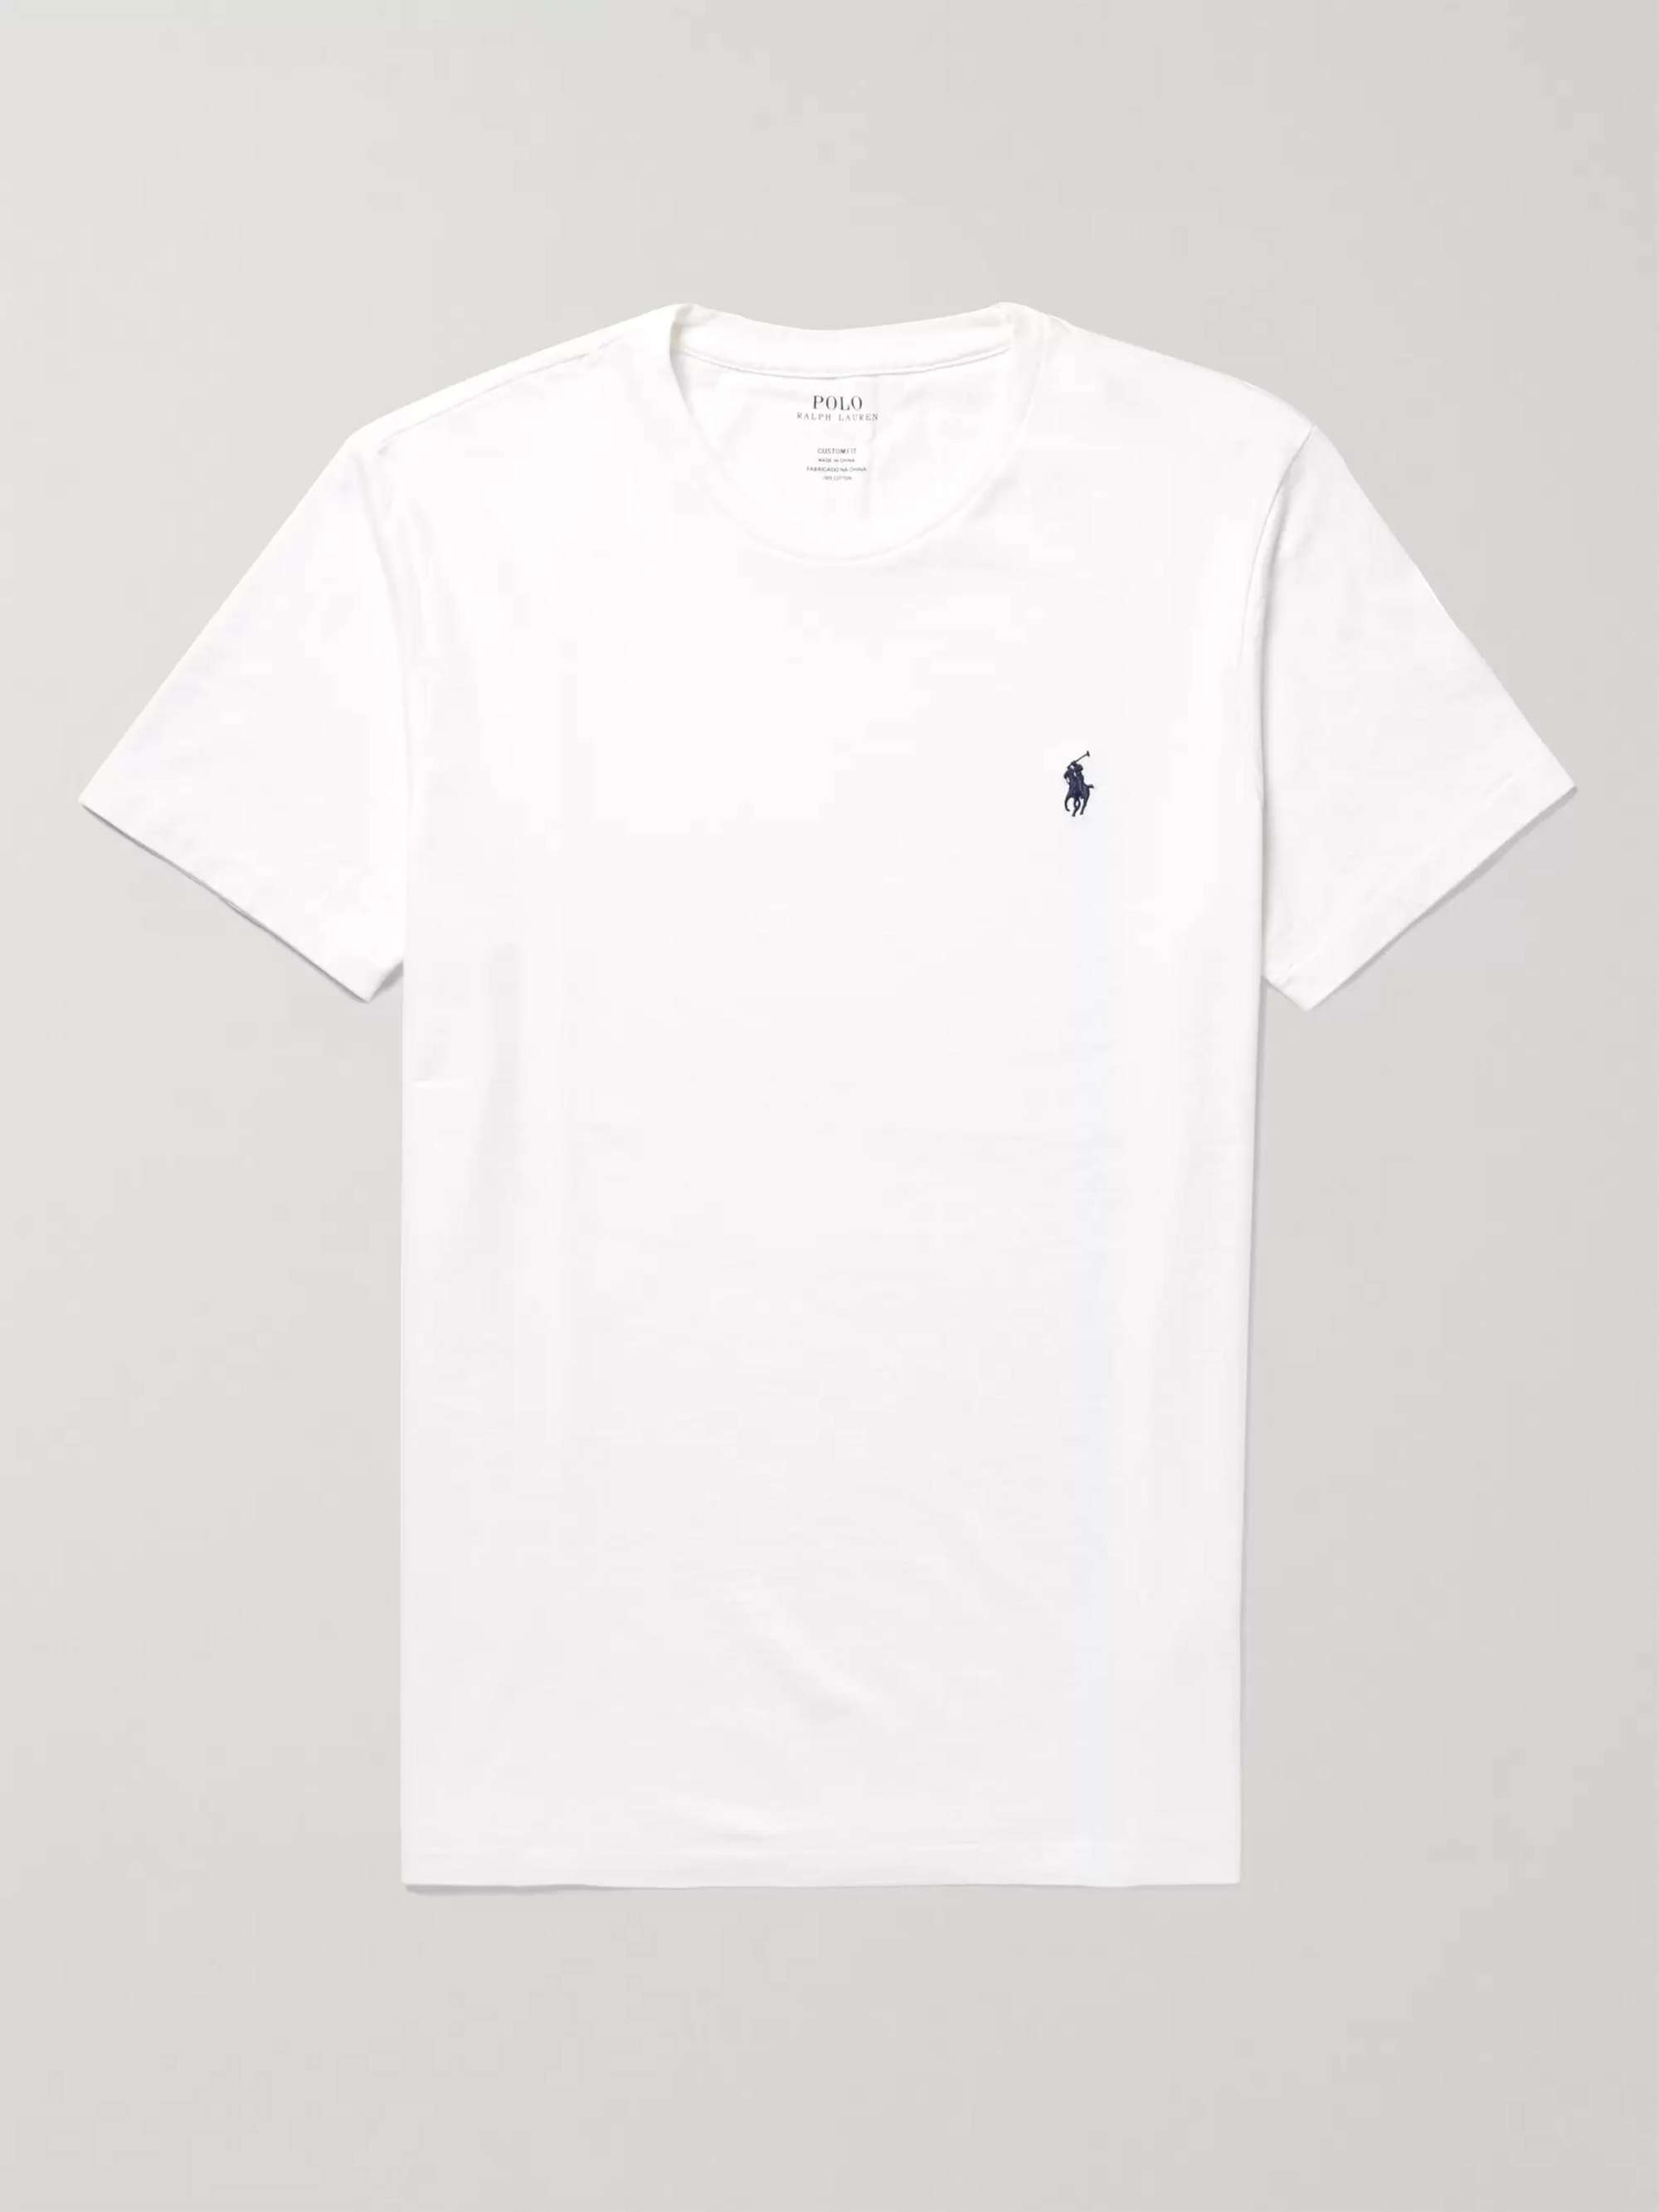 POLO RALPH LAUREN Slim-Fit Cotton-Jersey T-Shirt | MR PORTER